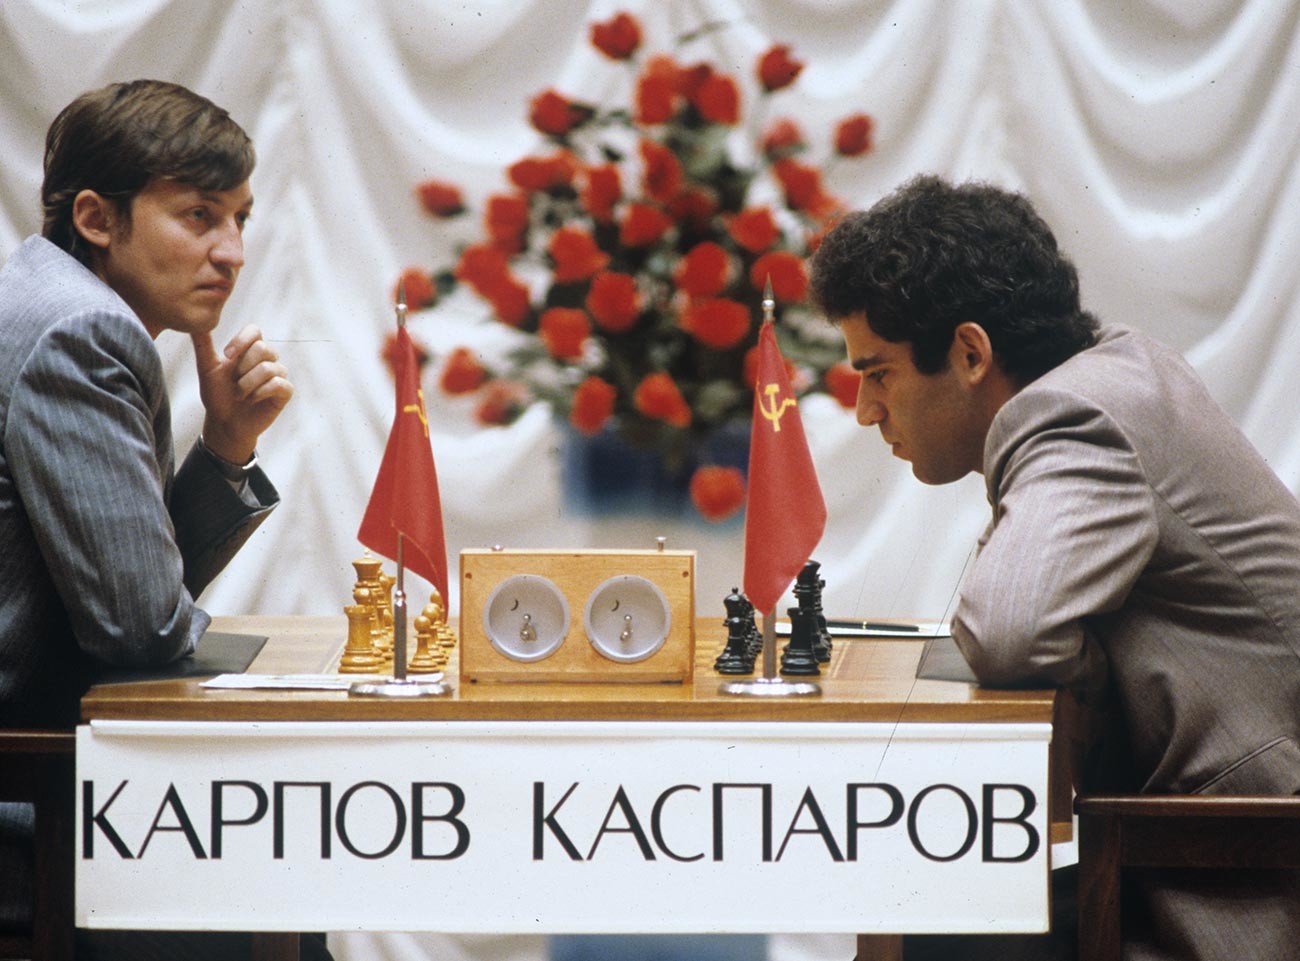 Kasparov v Karpov, Sport